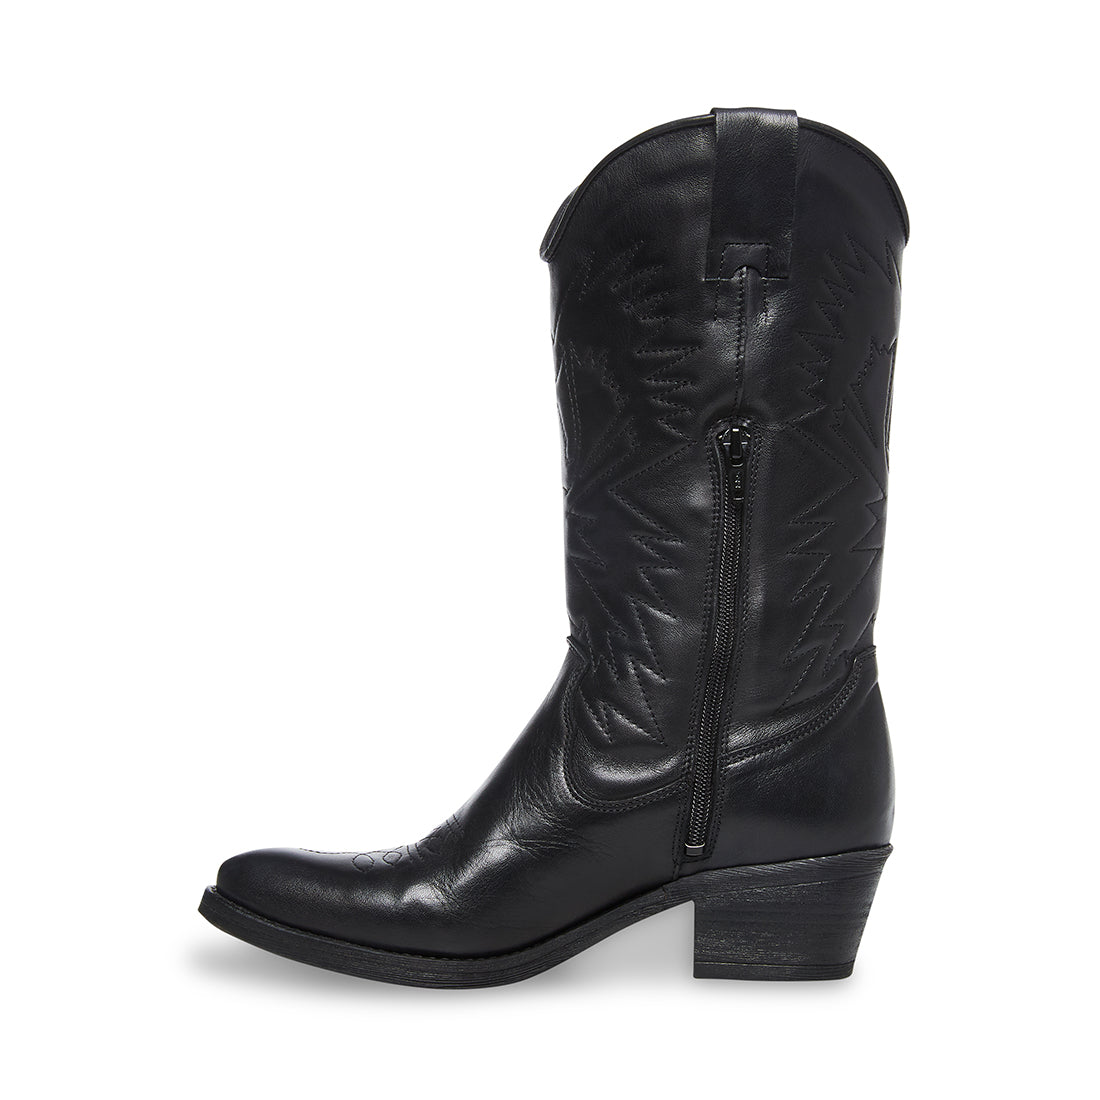 HAYWARD Black Leather Western Cowboy Boots | Women's Designer Boots ...